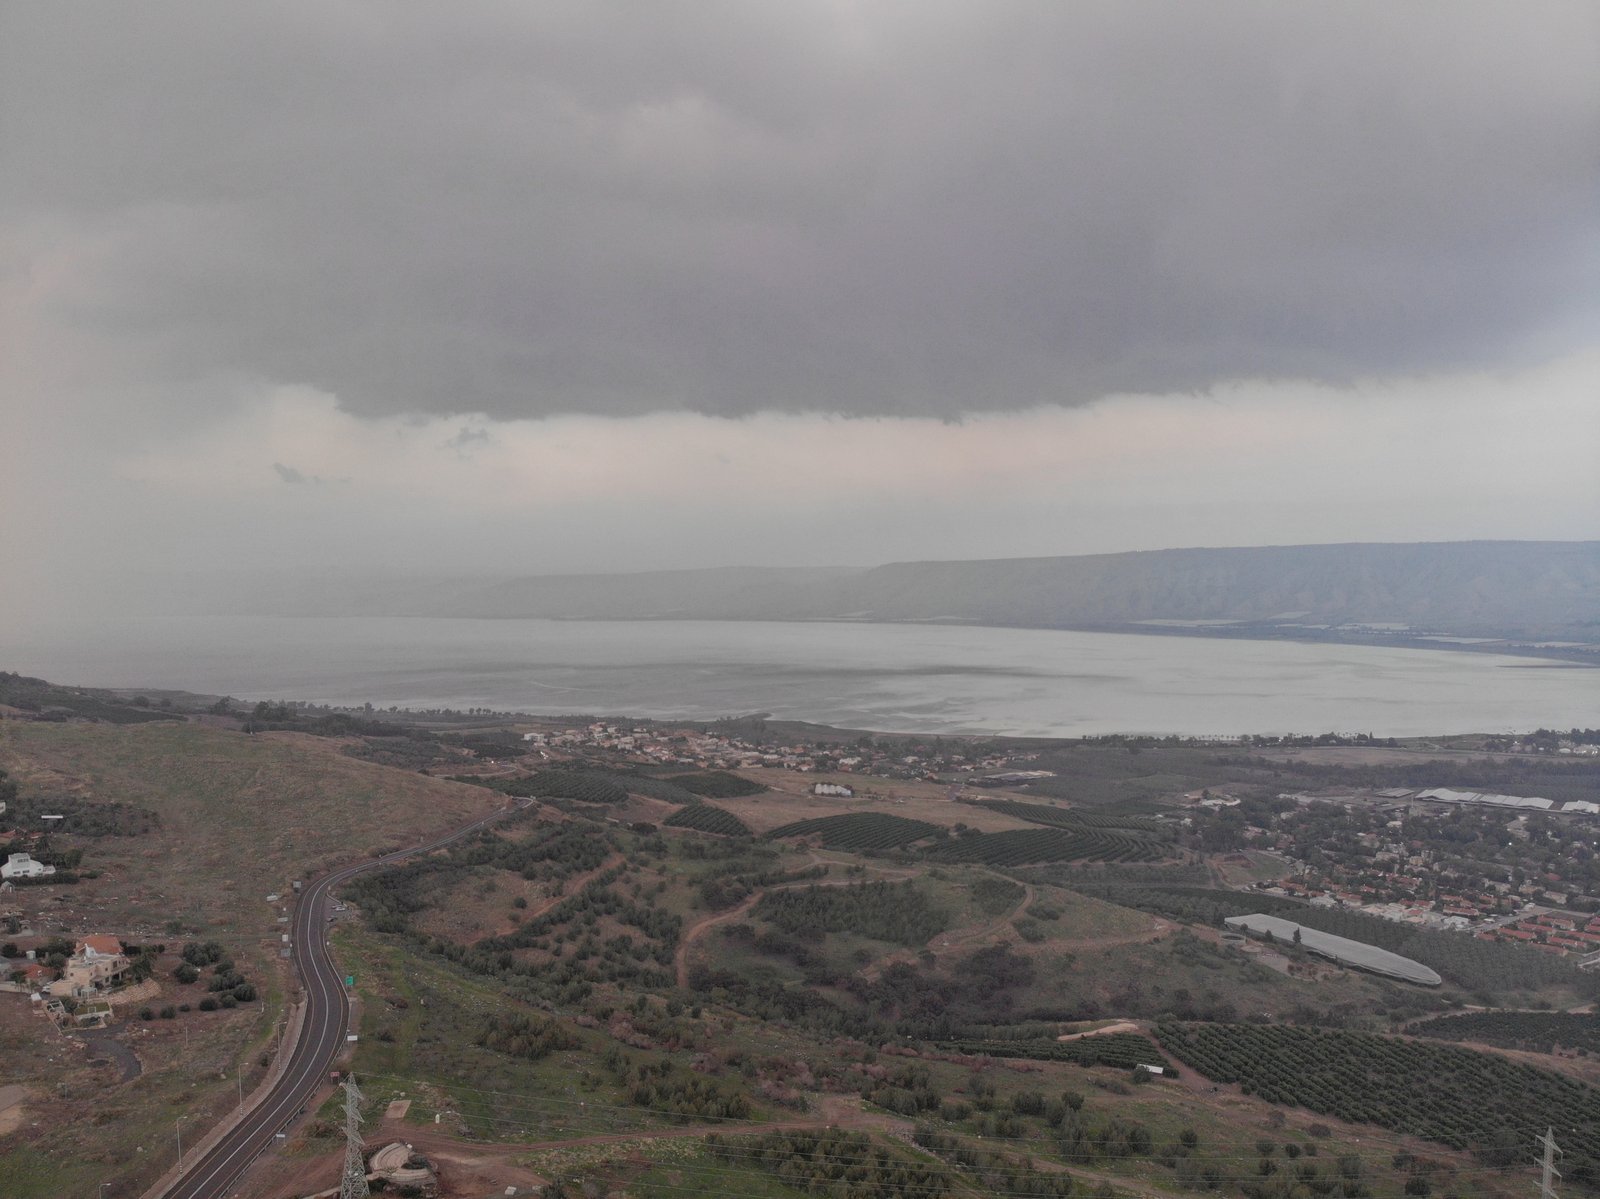 Sea of Galilee, Jordan Valley and Golan Hills